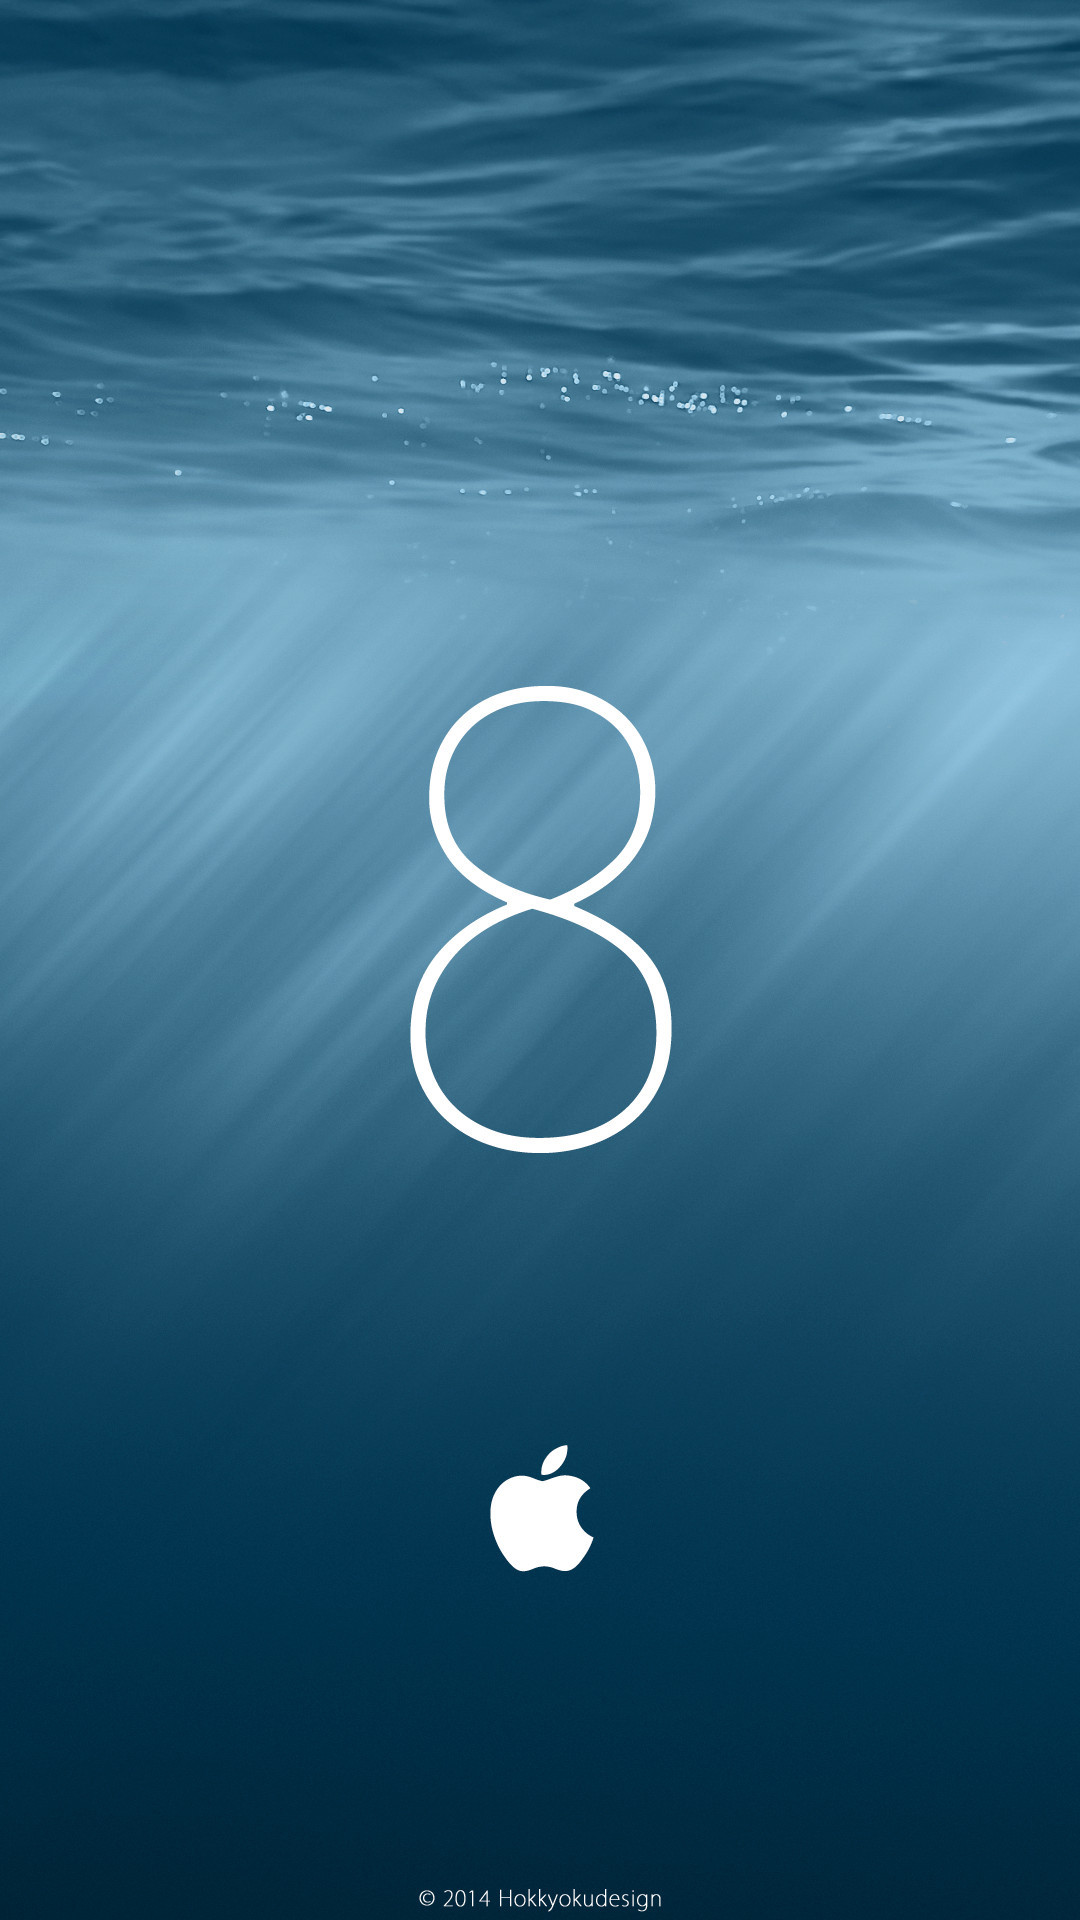 1080x1920 iOS8 HDå£ç´"iOS8 with 8 and Apple Mark" |iOS8 wallpaper for iPhone